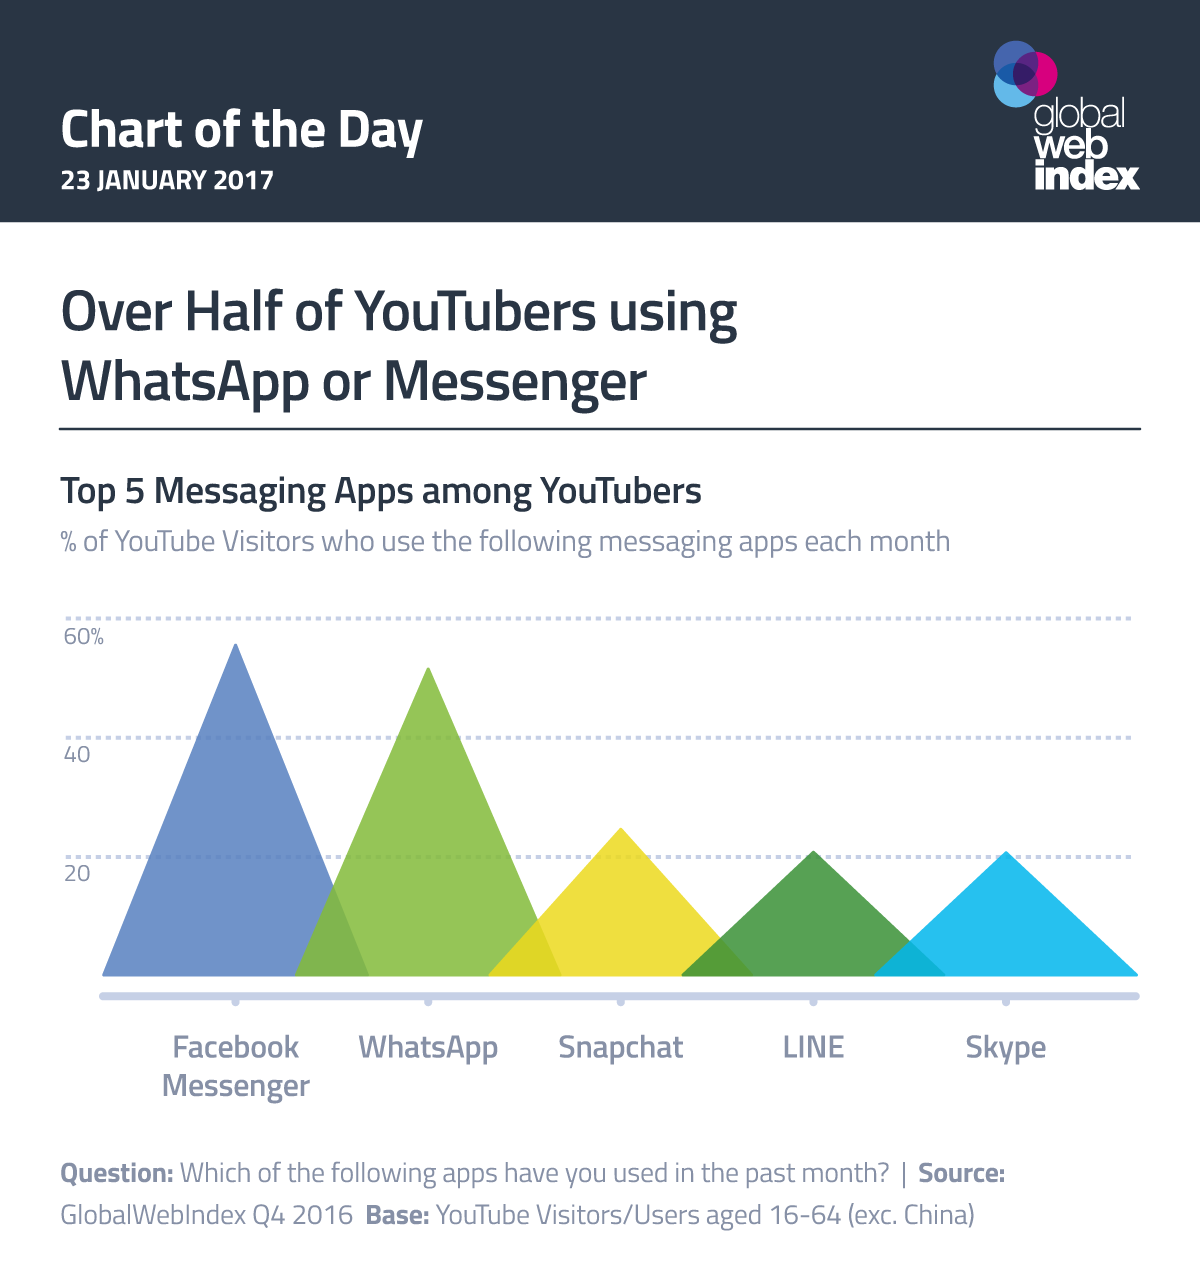 Over Half of YouTubers using WhatsApp or Messenger